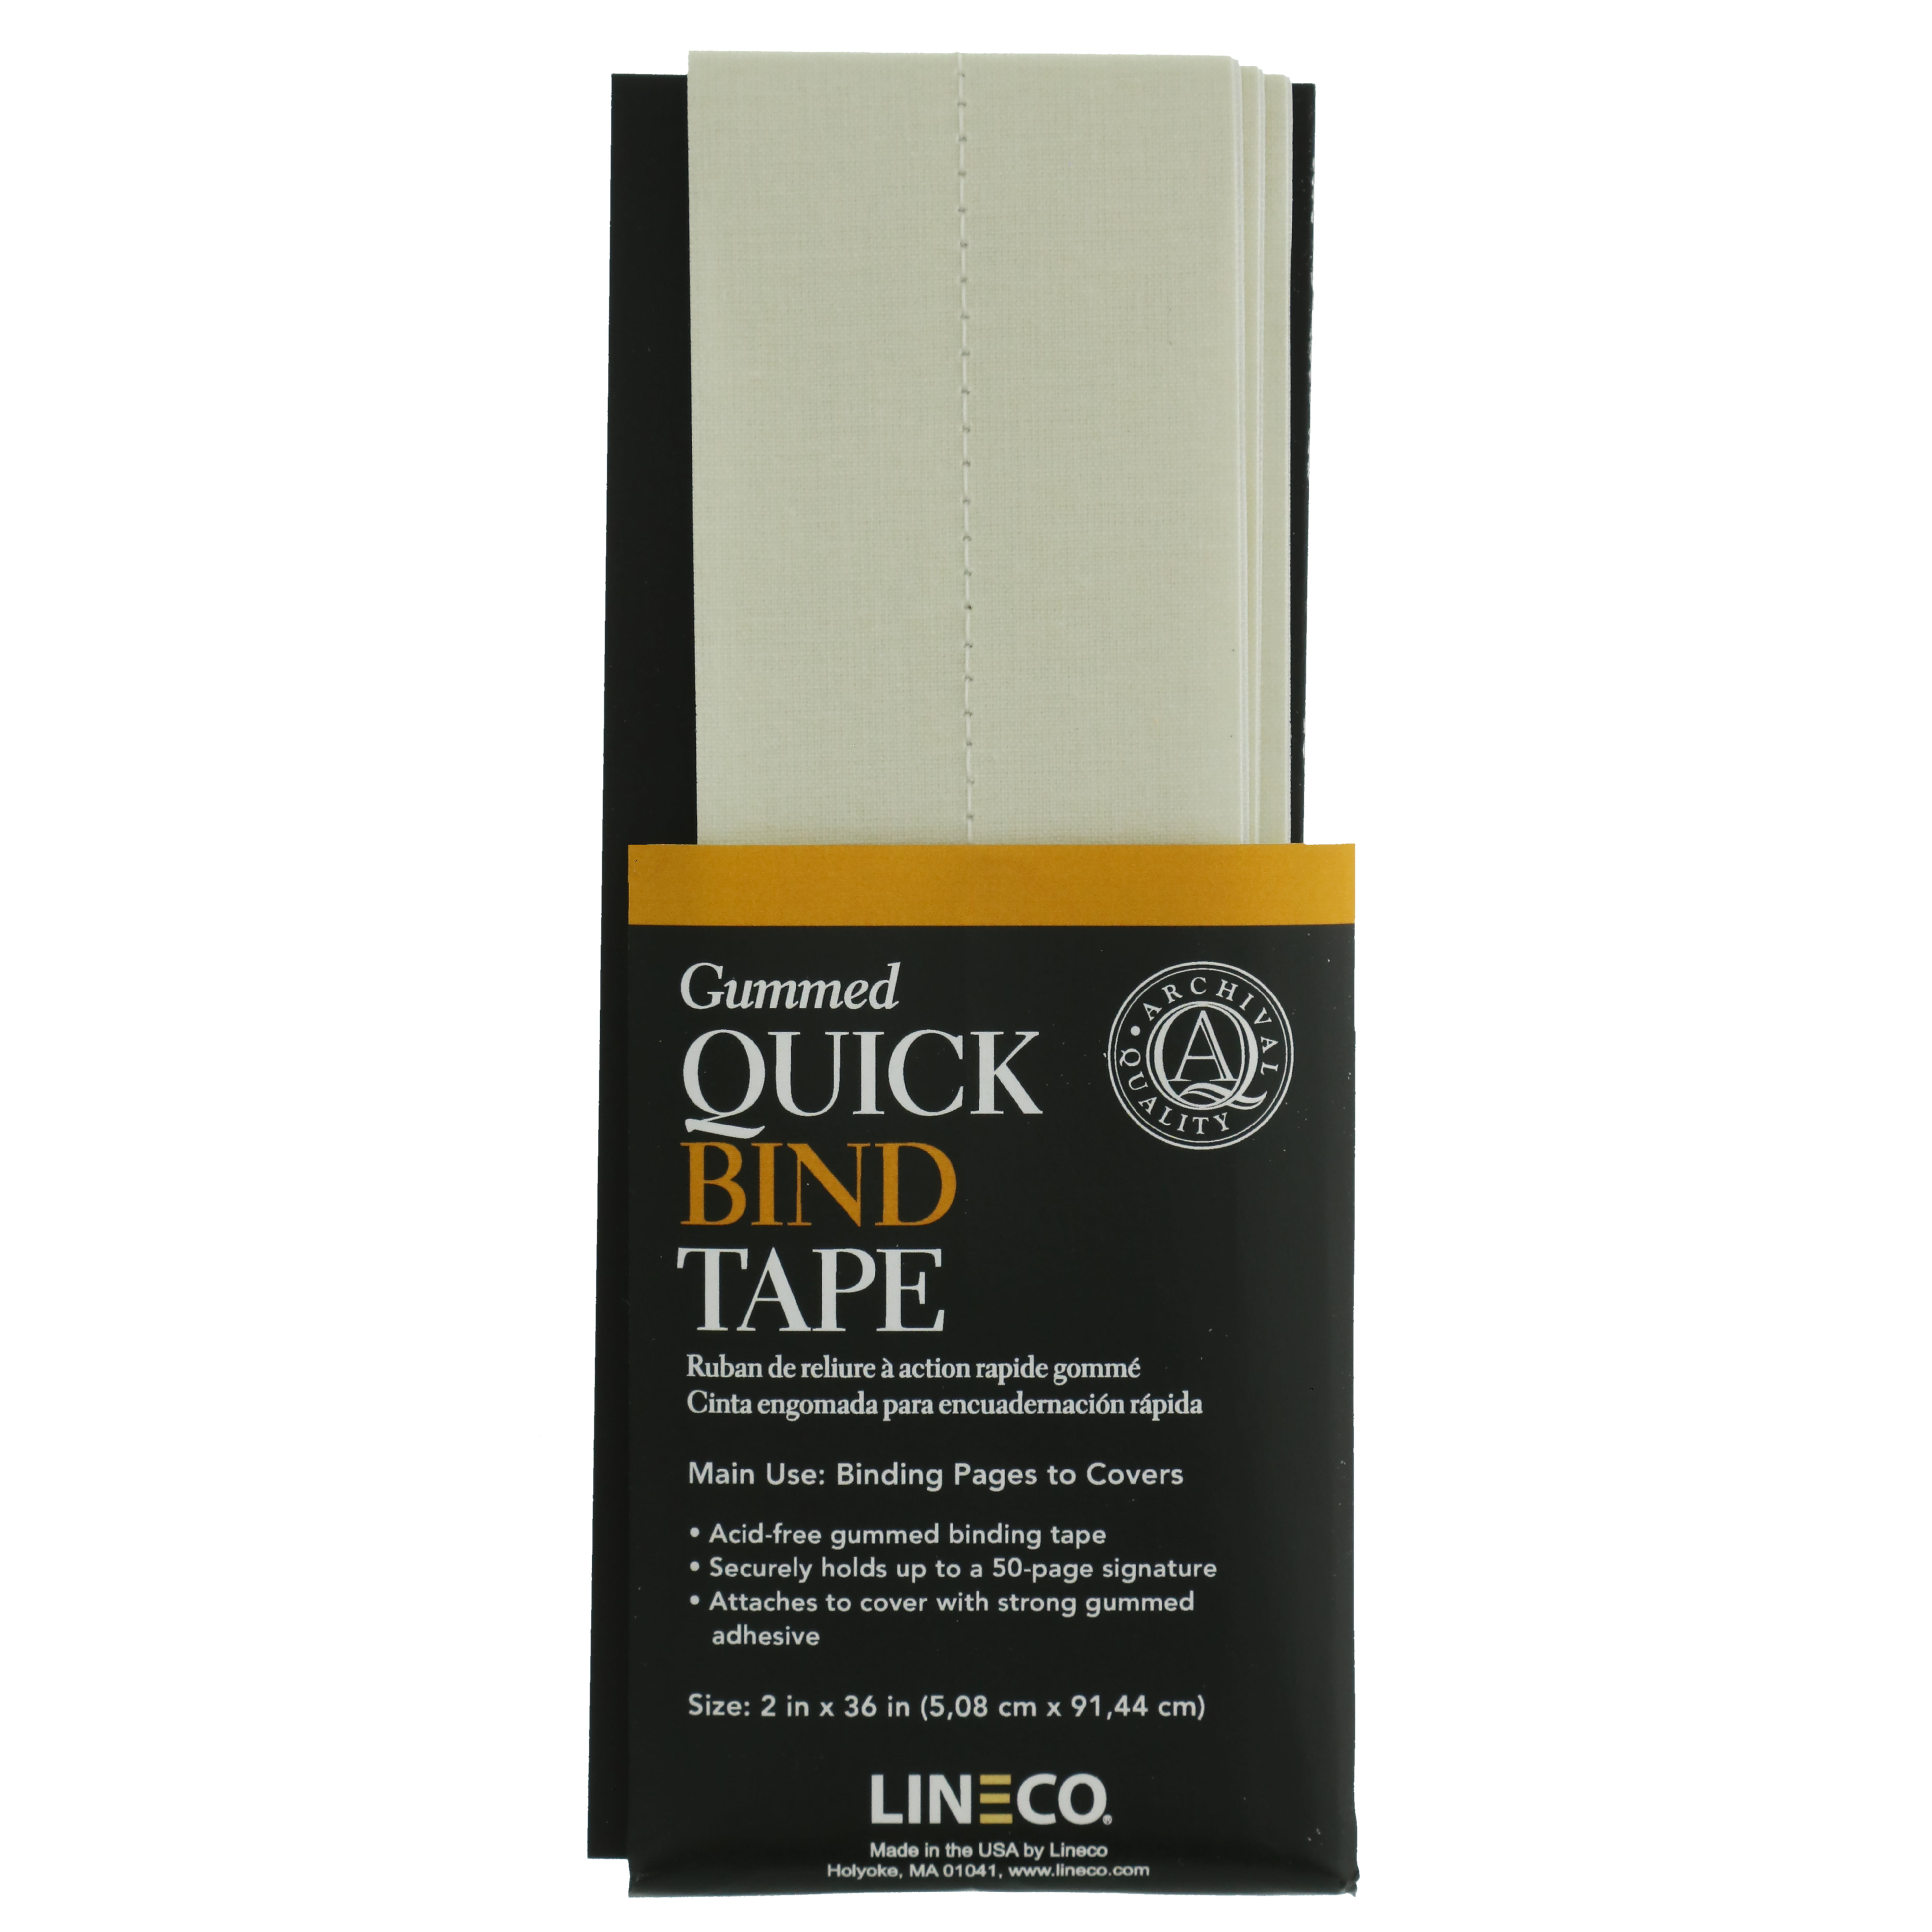 Lineco Book Repair Tape White